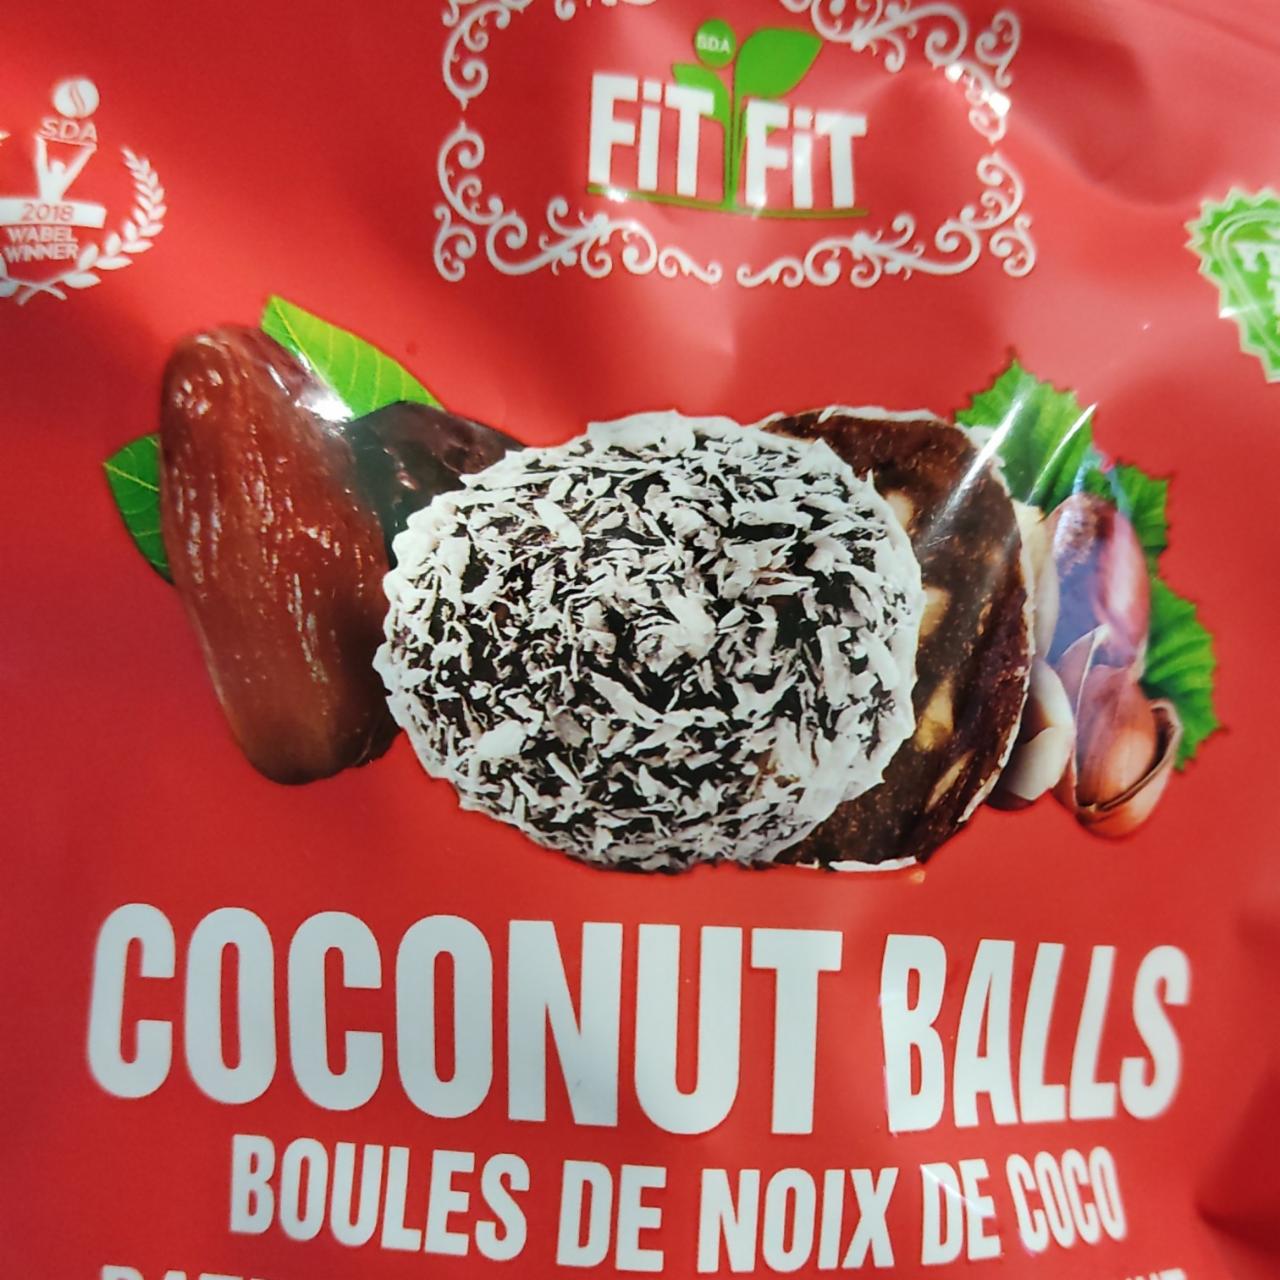 Фото - Coconut balls Fit Fit